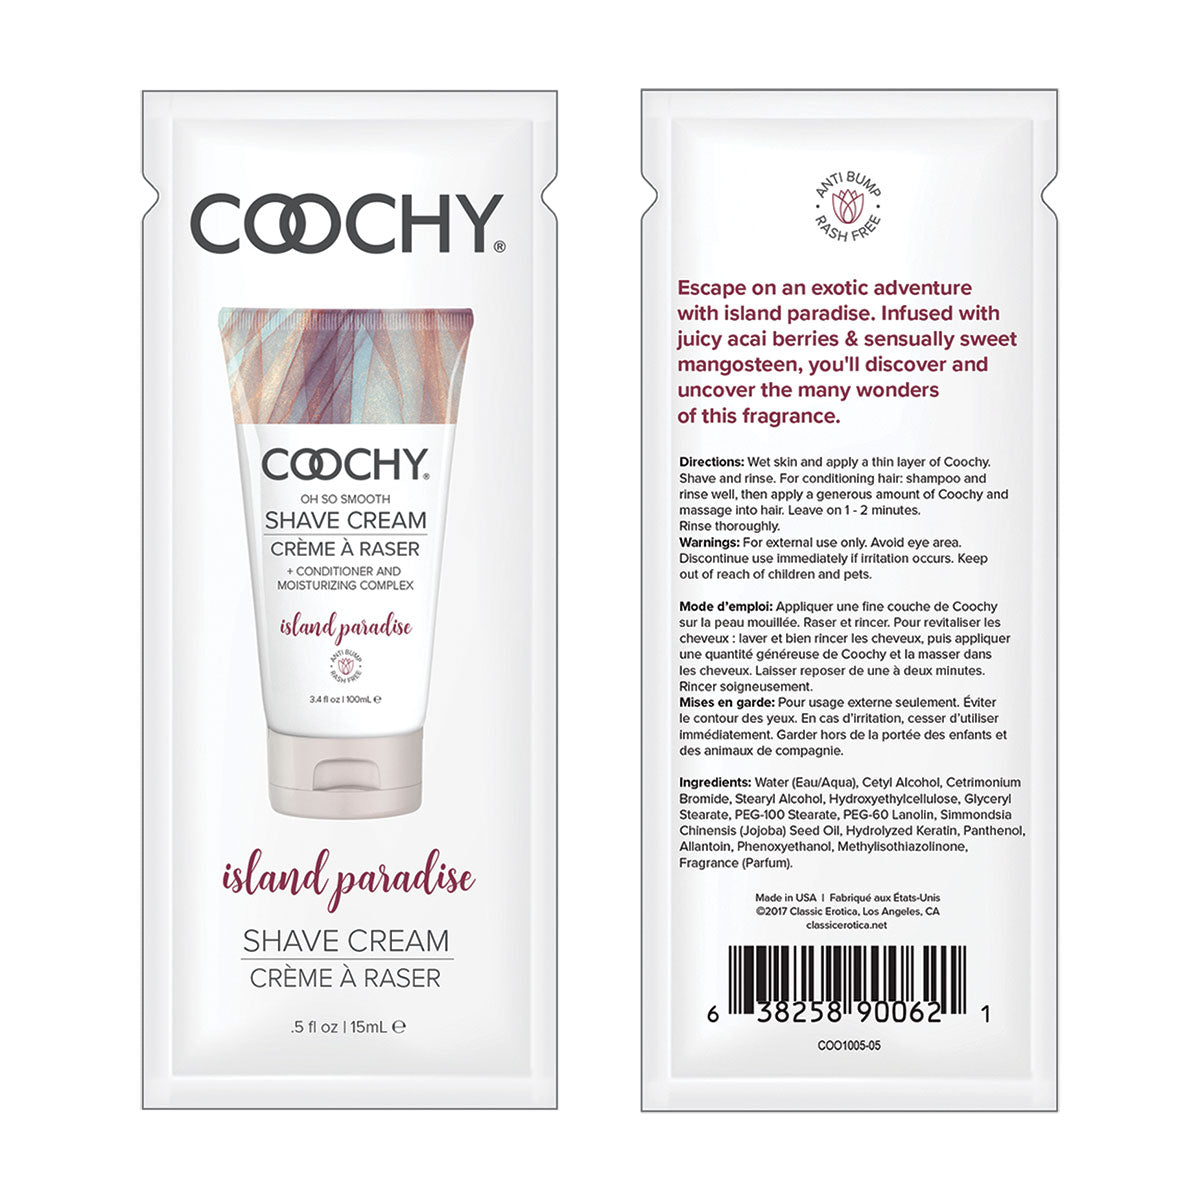 Coochy Shave Cream 15ml. 24pc. Display - Island Paradise